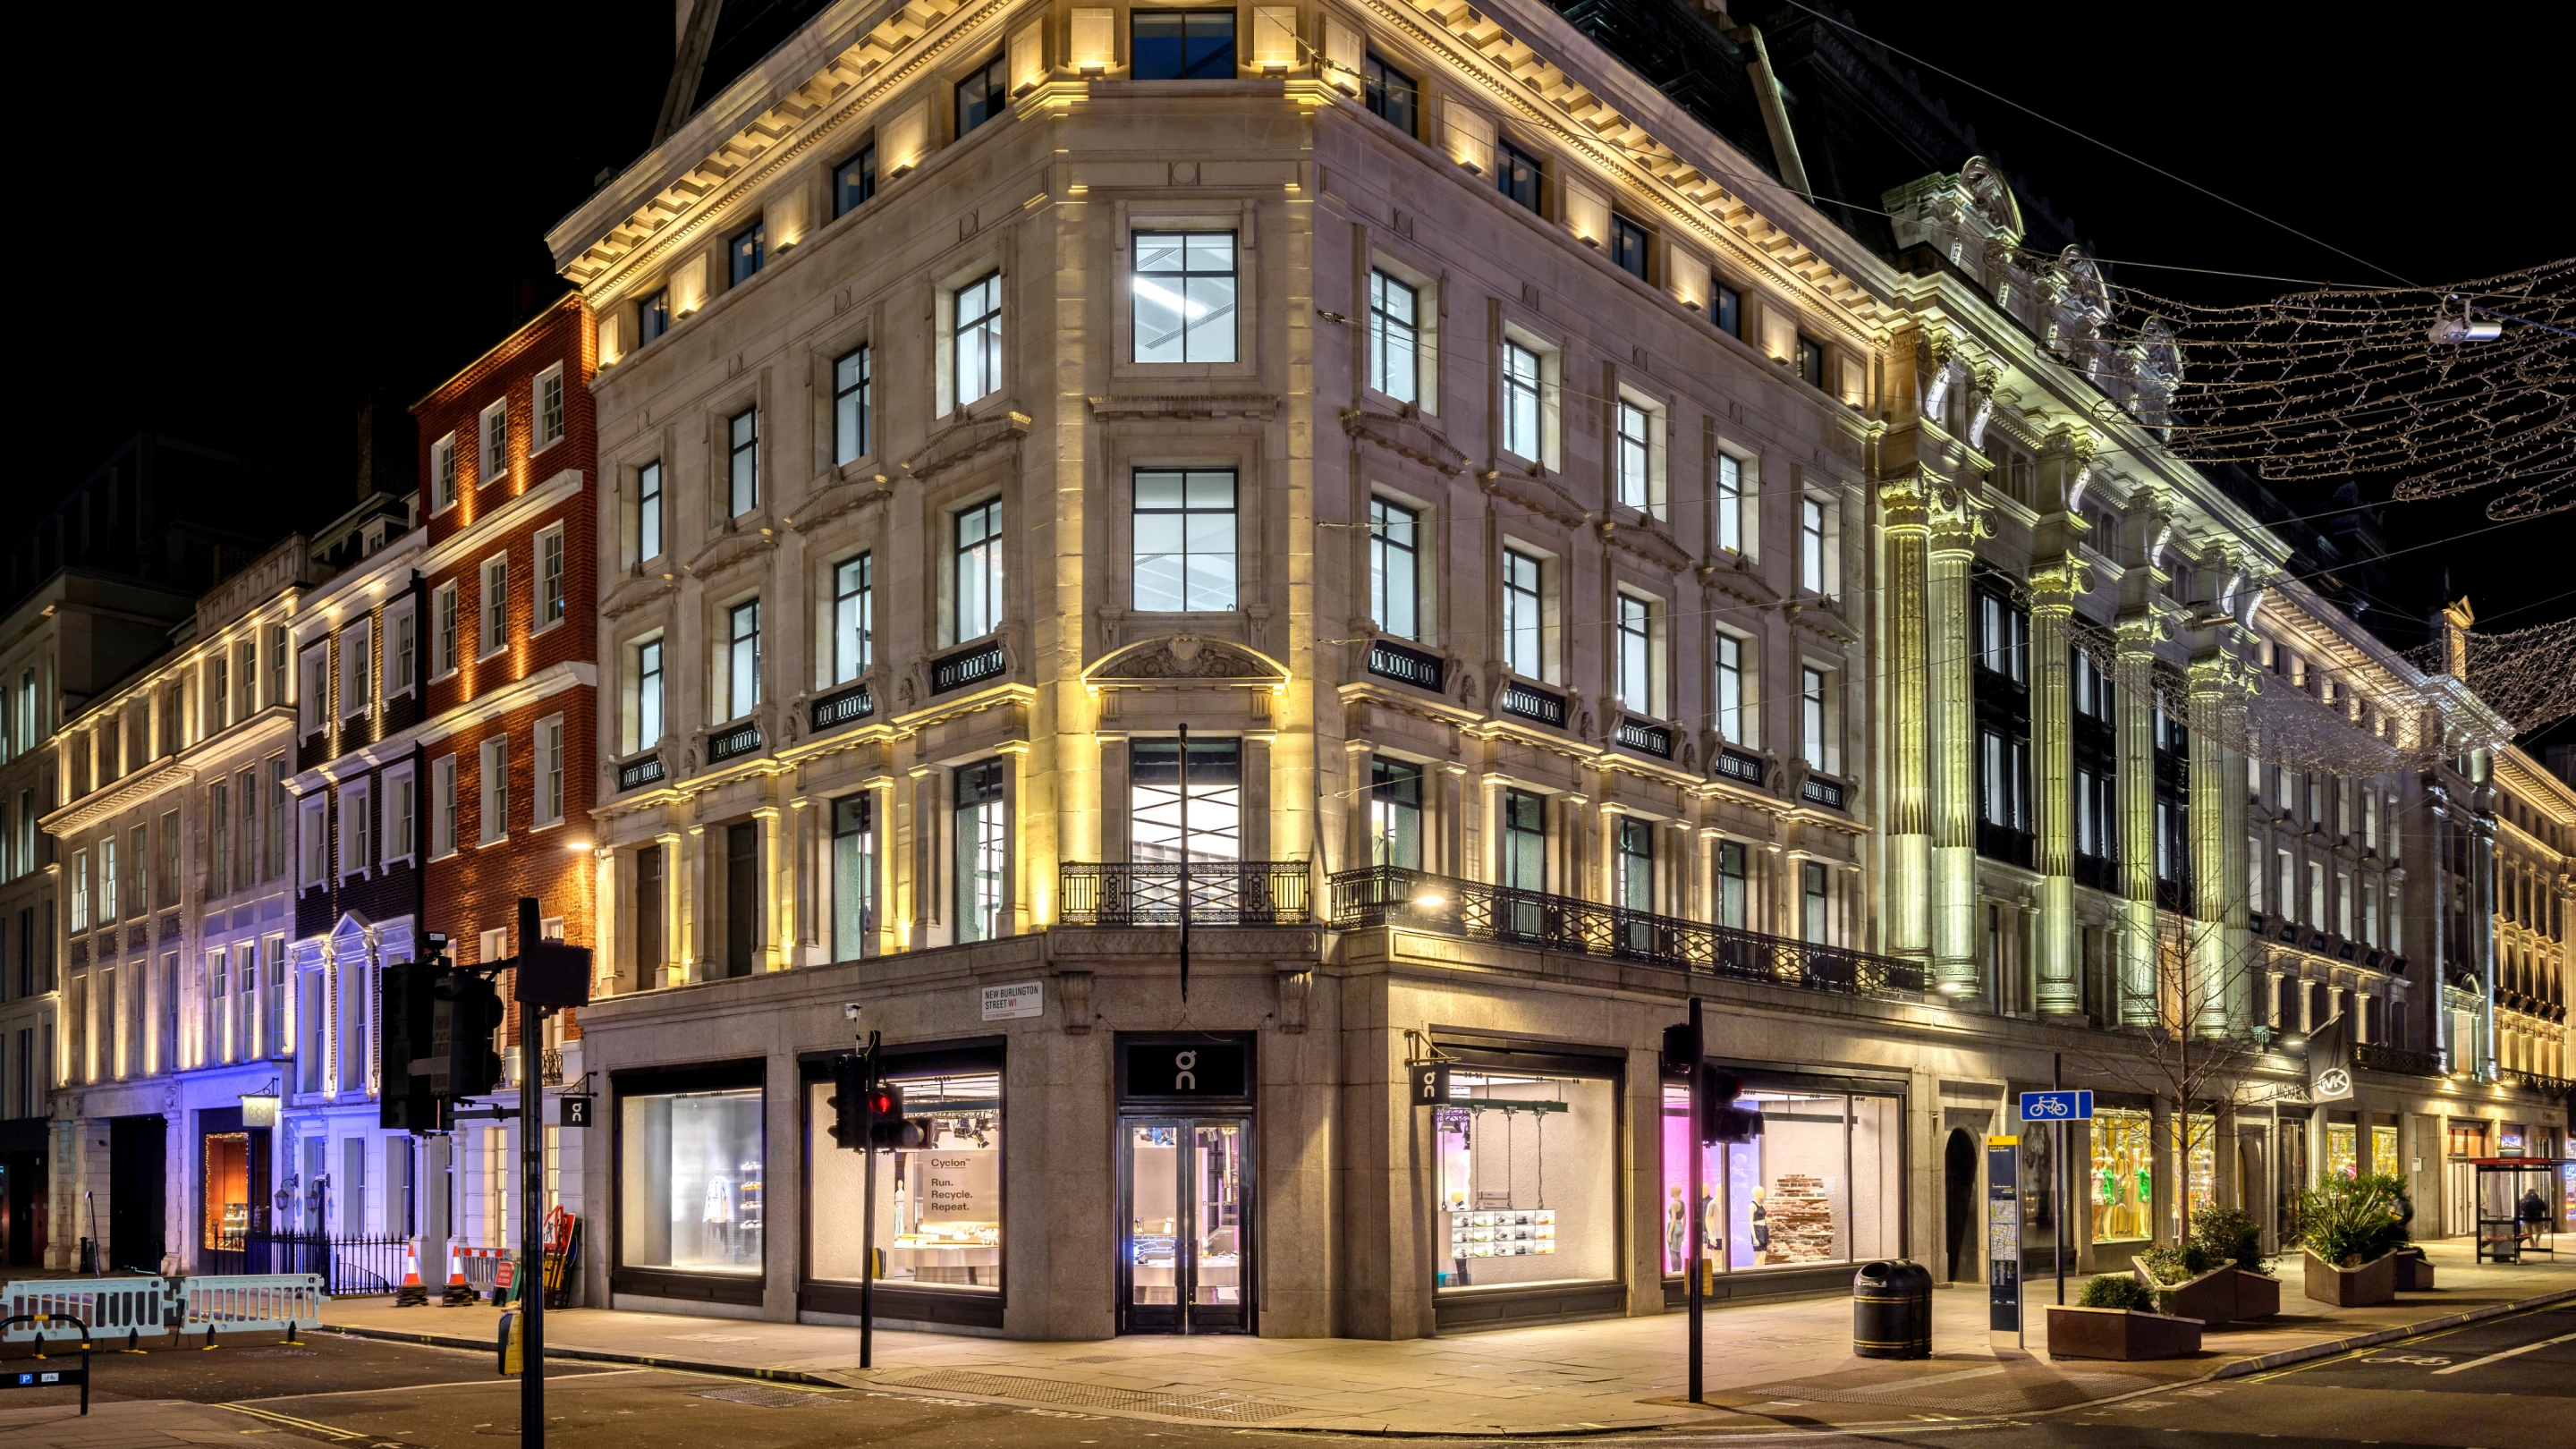 flagship store london